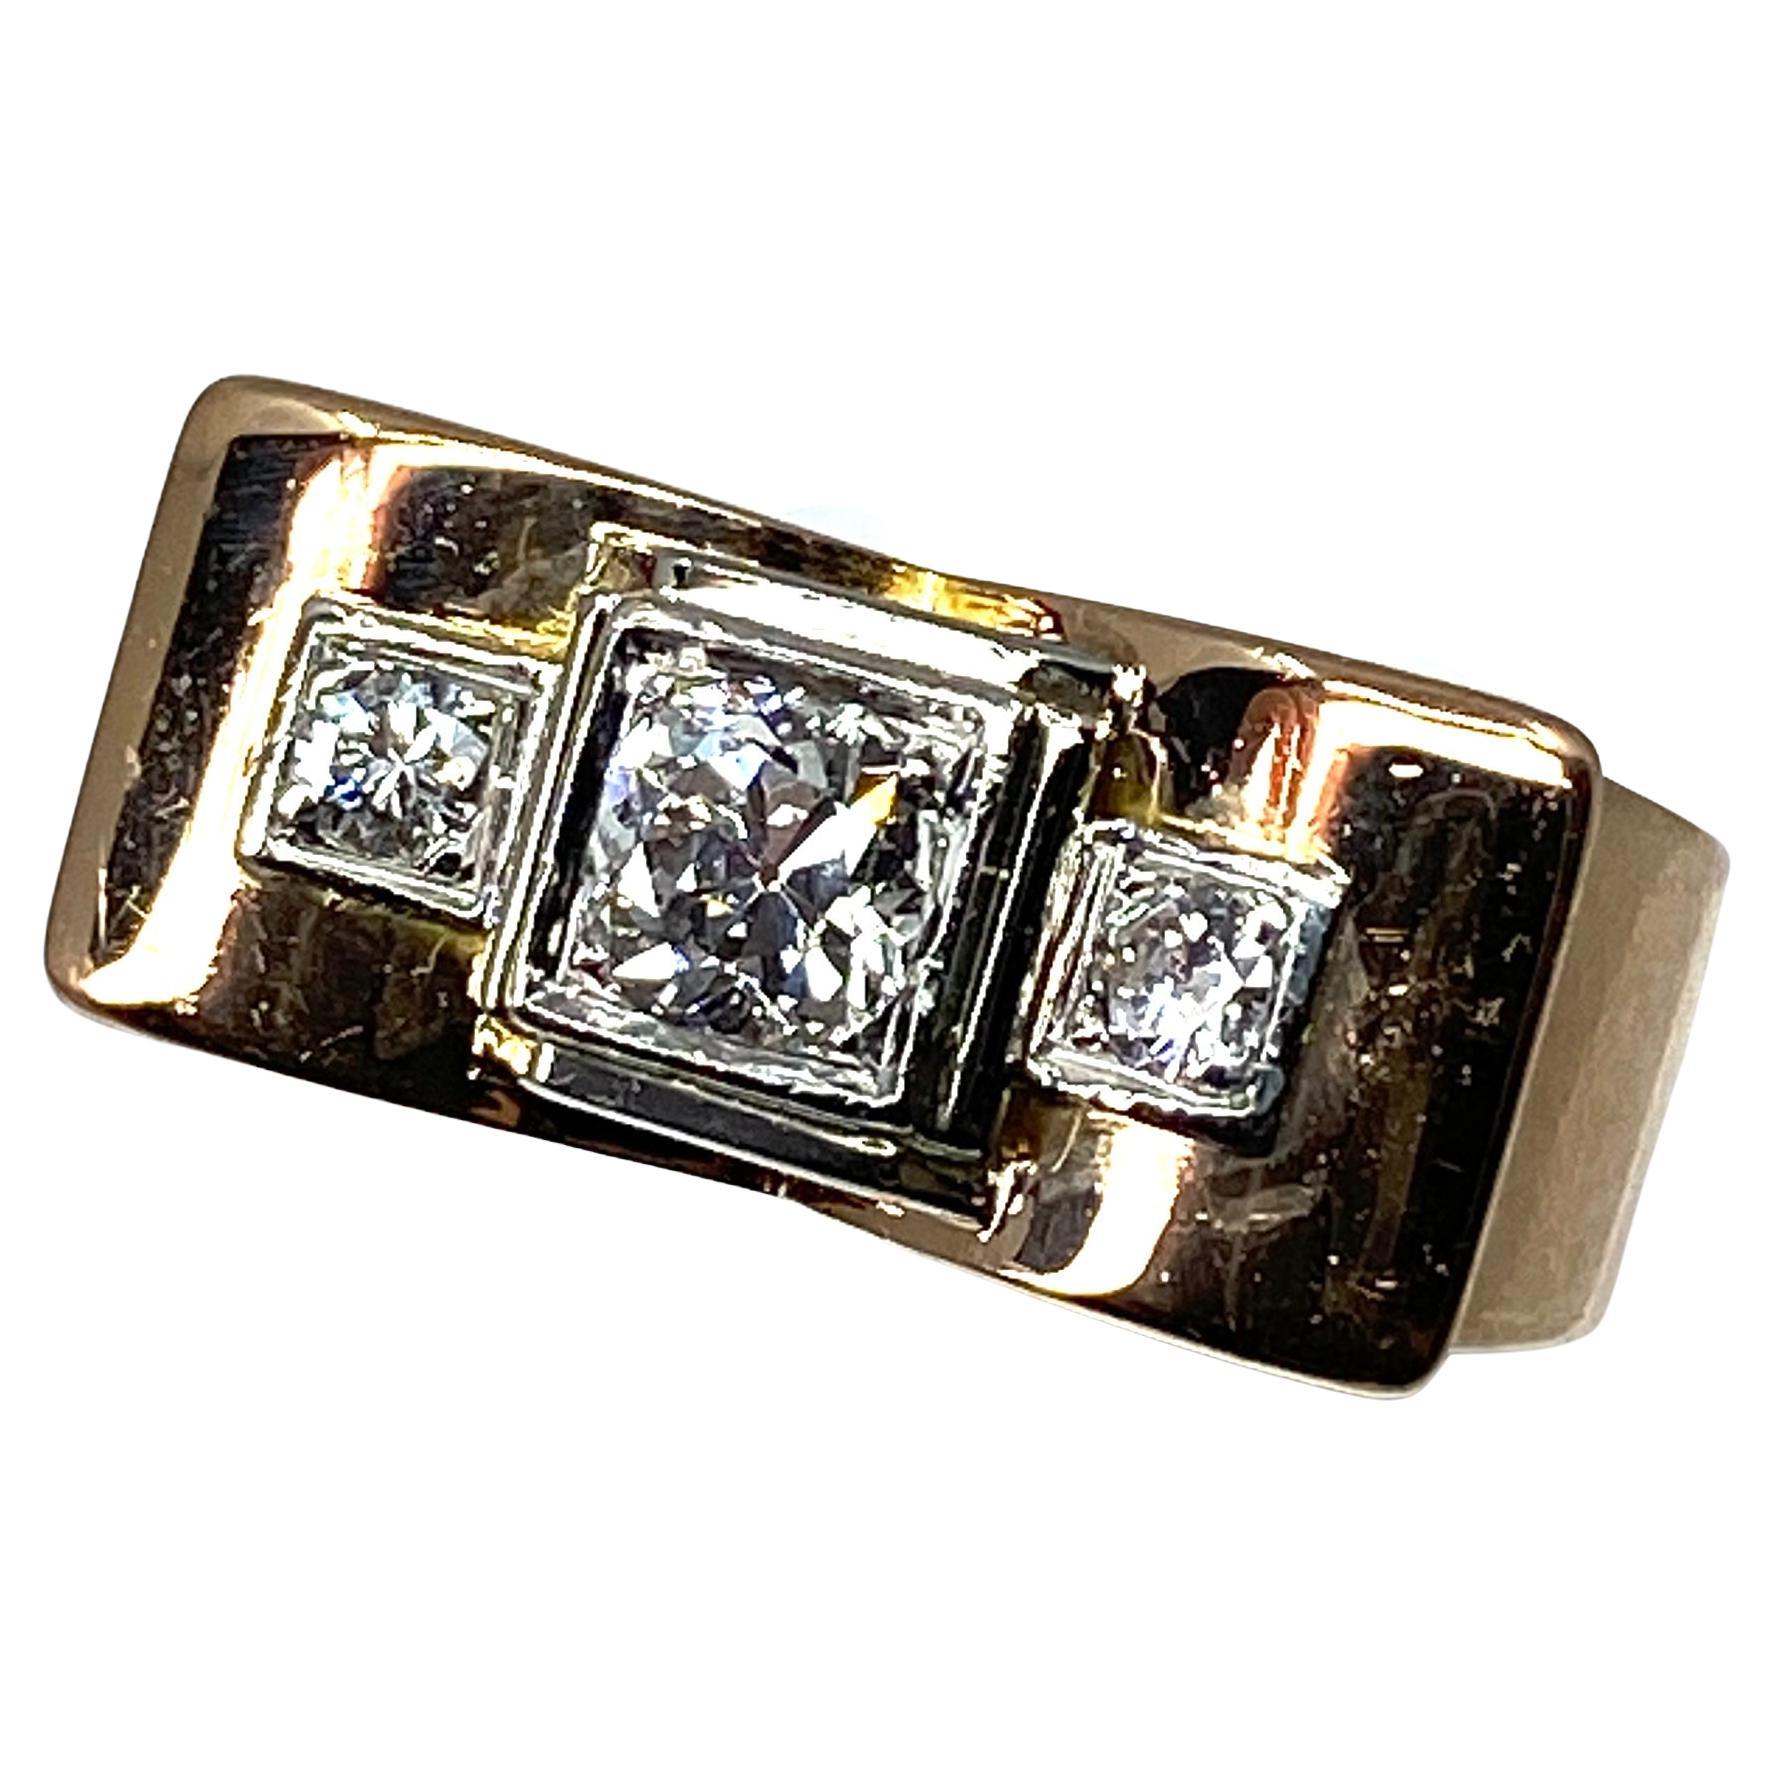 TANK ring in 18 carat gold set with 3 diamonds 